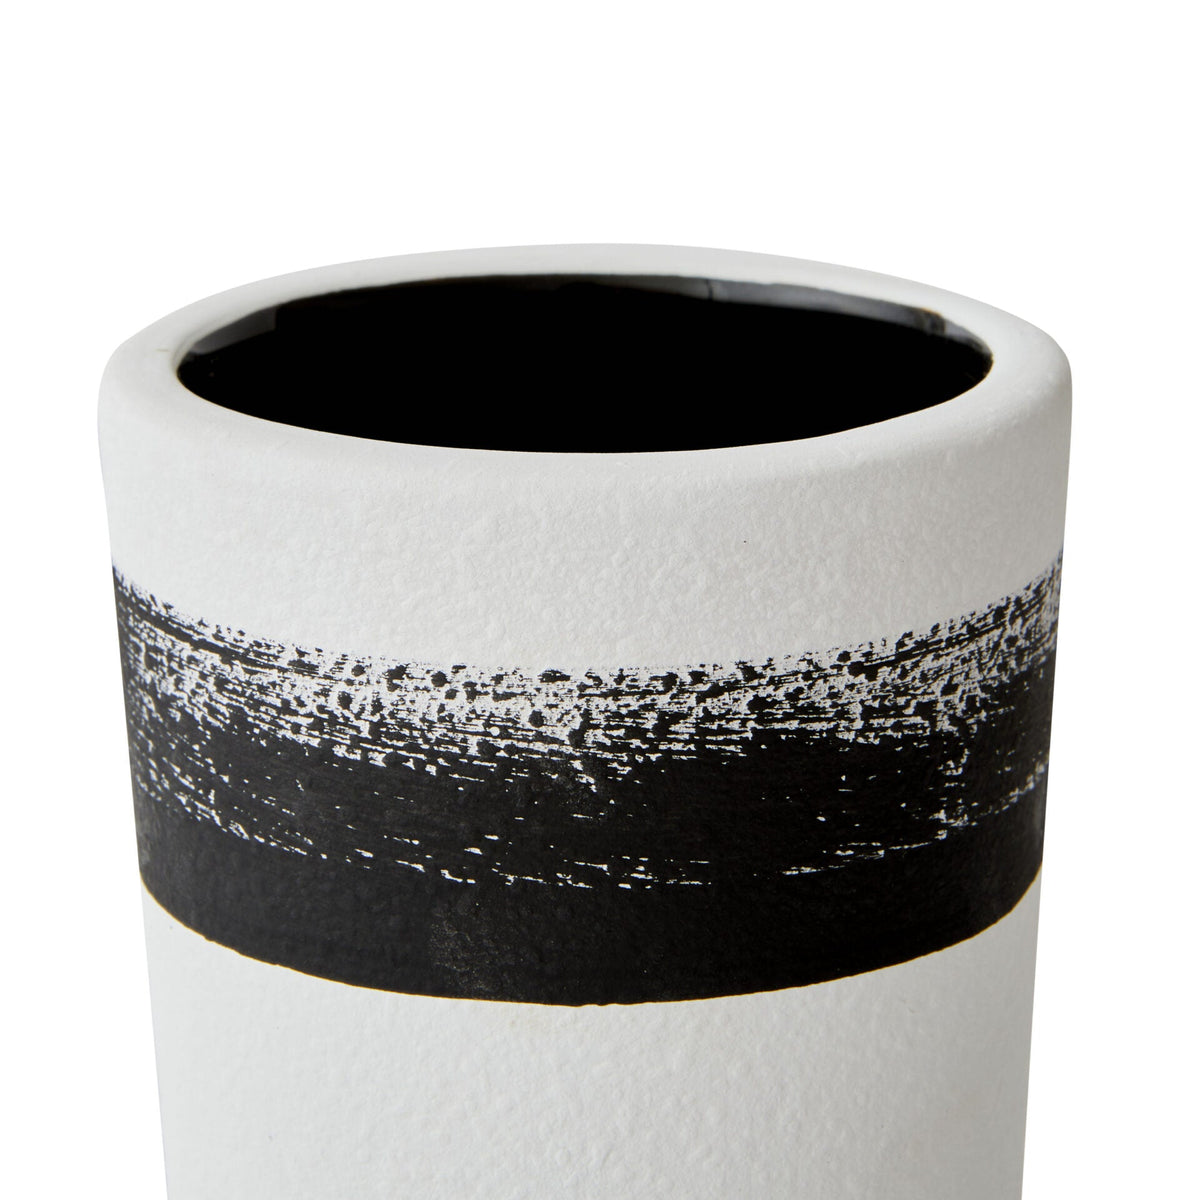 Ceramic Brushed Vase in Black & White - Large